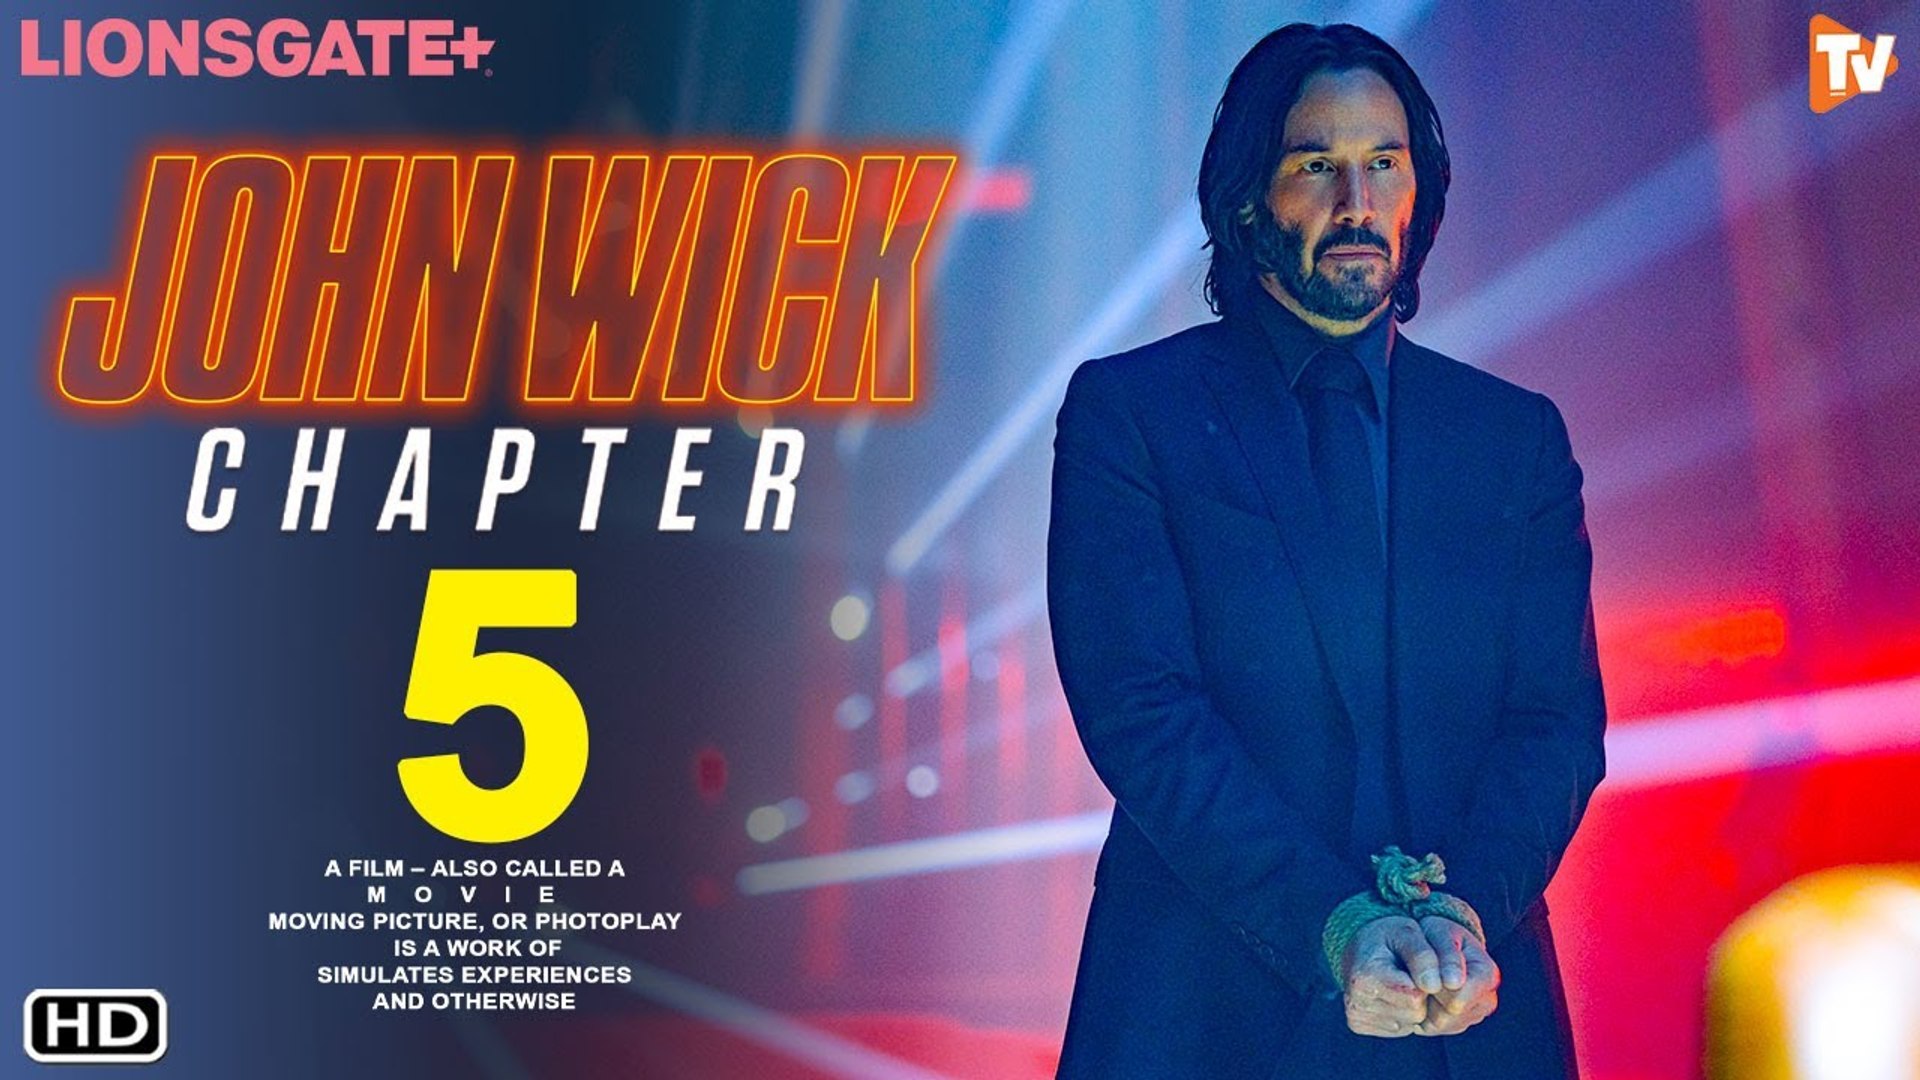 John Wick 5 - Official Trailer (2023) Keanu Reeves, lionsgate